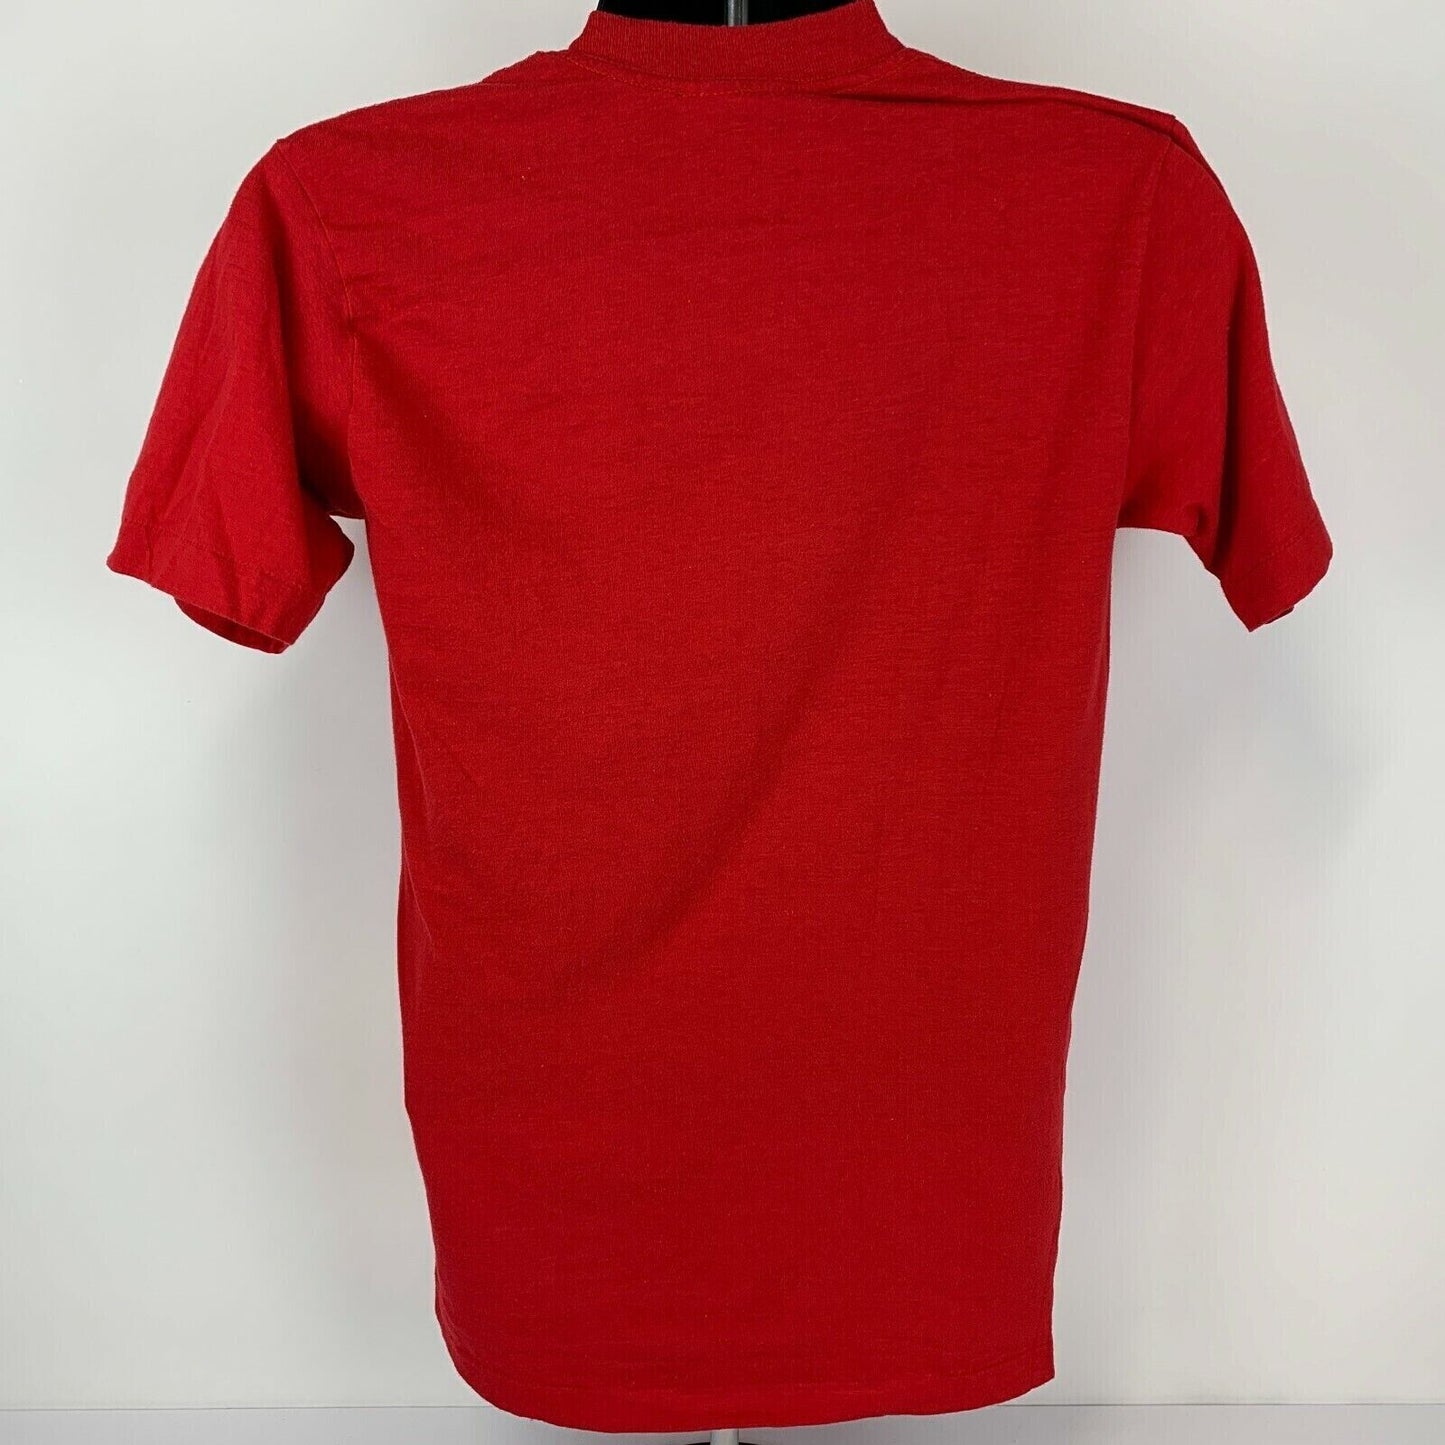 Houston Gamblers Vintage 80s T Shirt Small USFL Football Texas Tee Mens Red